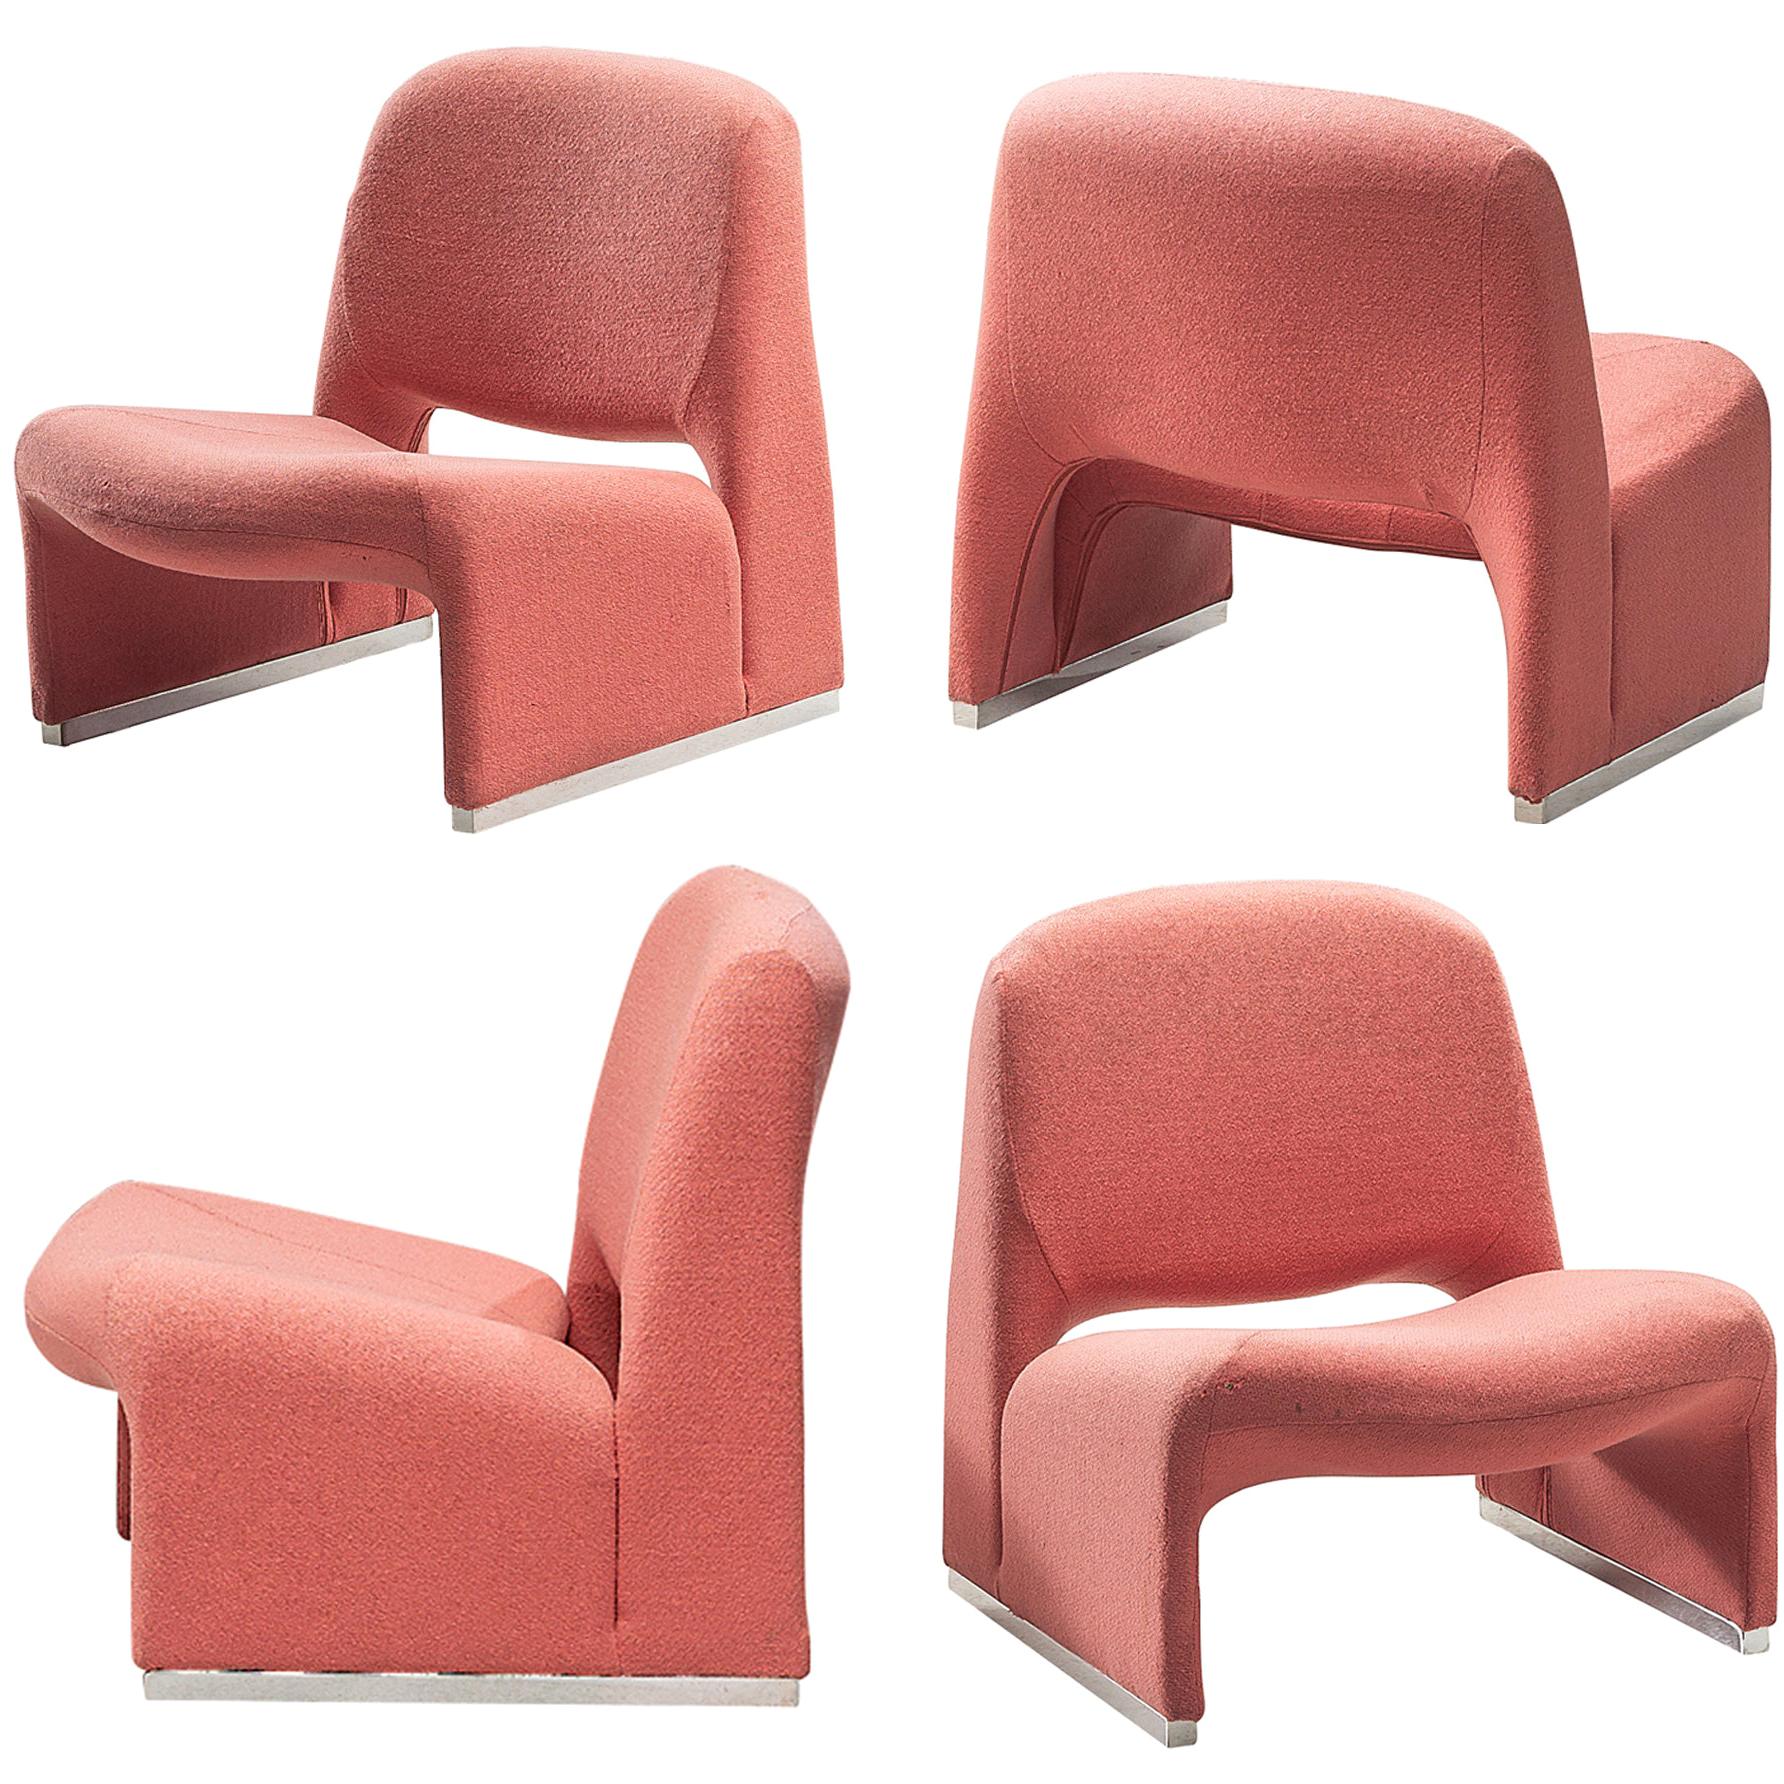 Giancarlo Piretti 'Arki' Easy Chairs in Pink Upholstery